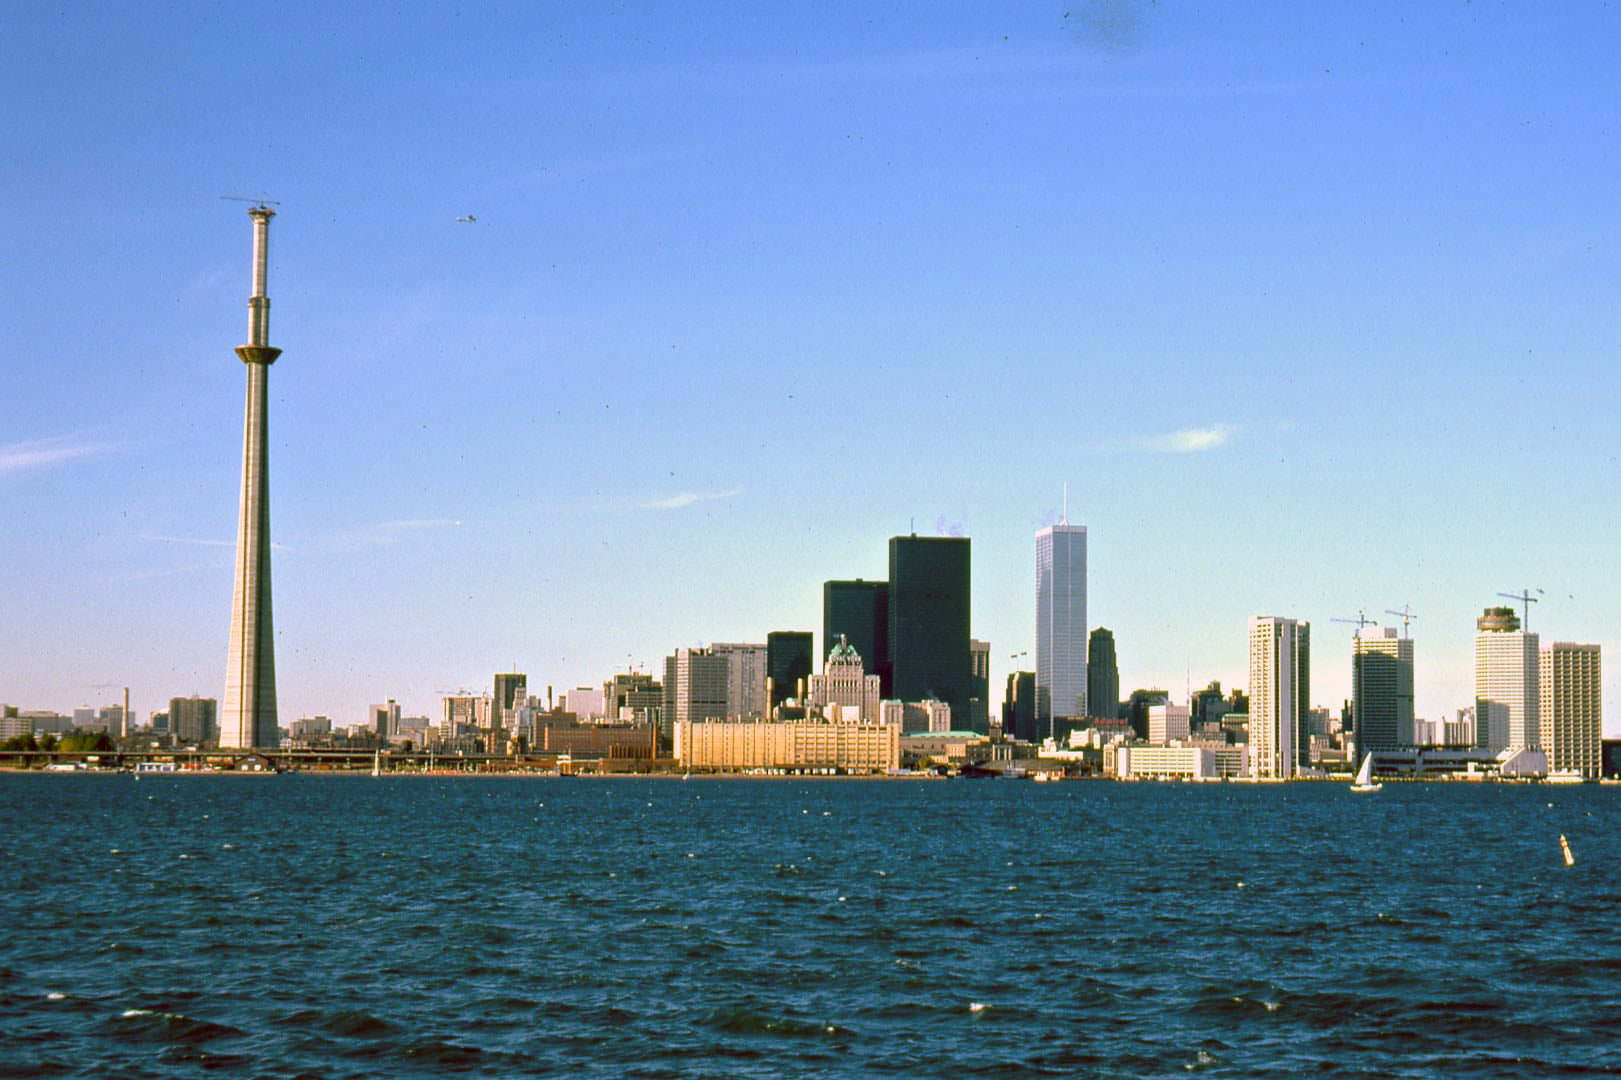 Toronto skyline viewed from the island, 1974